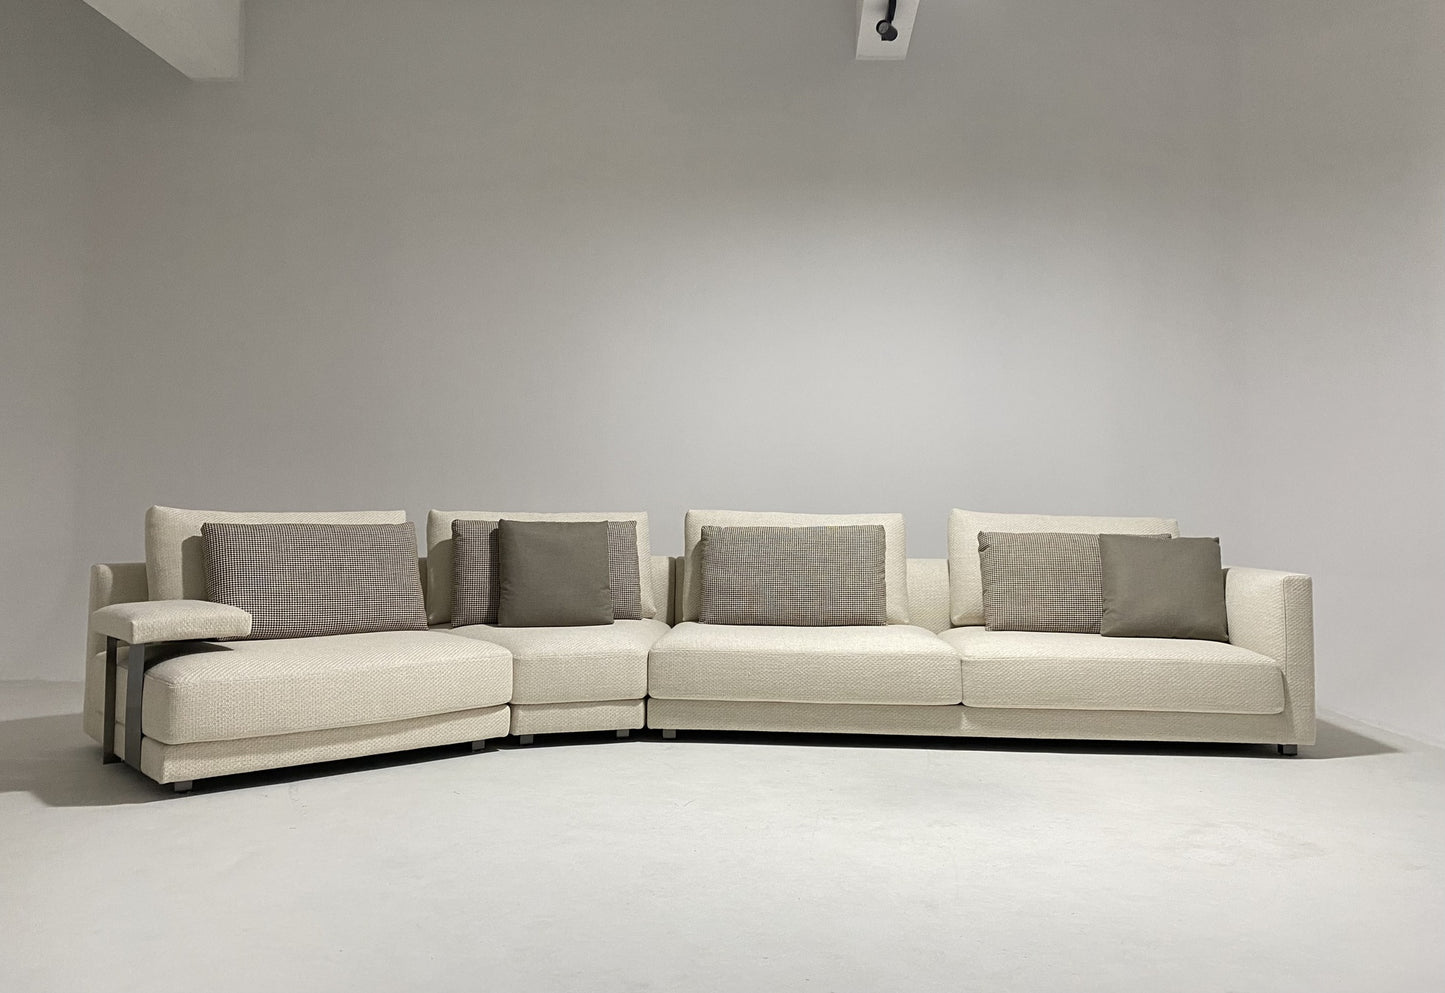 Poliform Bristol Sofa